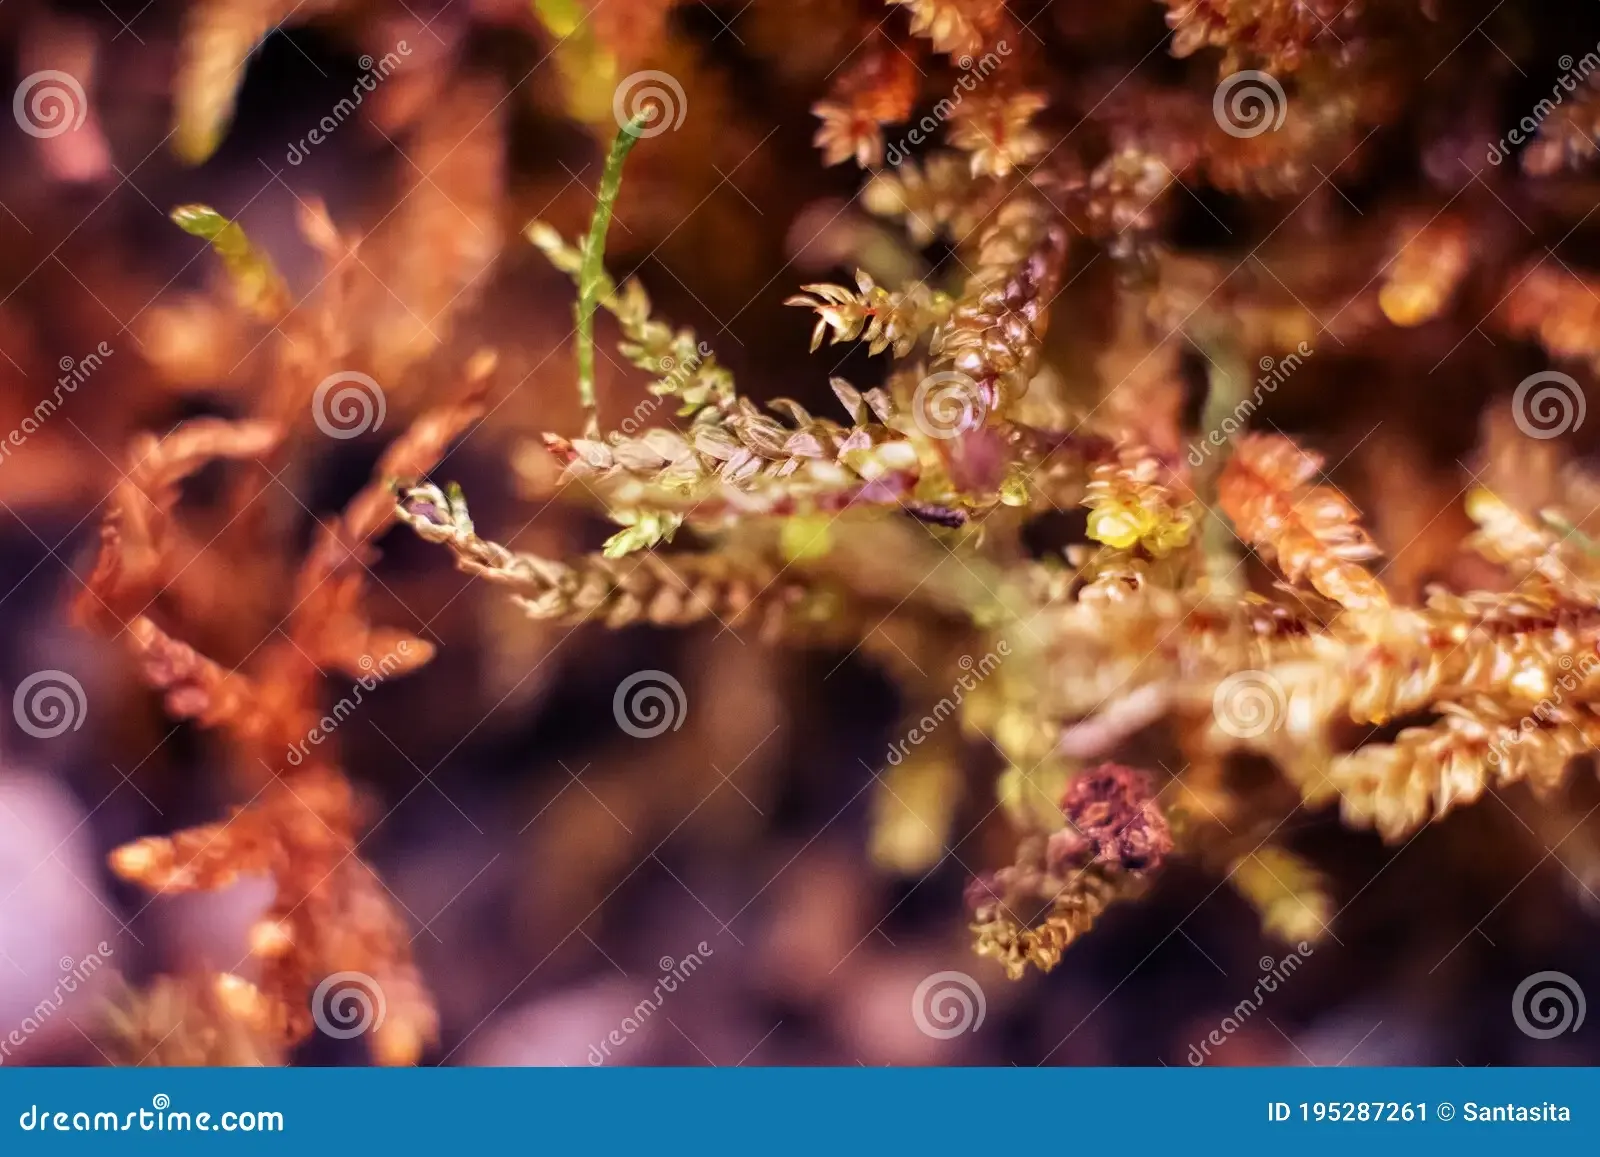 macro-bryum-moss-pohlia-nutans-dew-drops-forest-floor-over-dark-green-background-mossy-plants-mosses-195287261.jpg